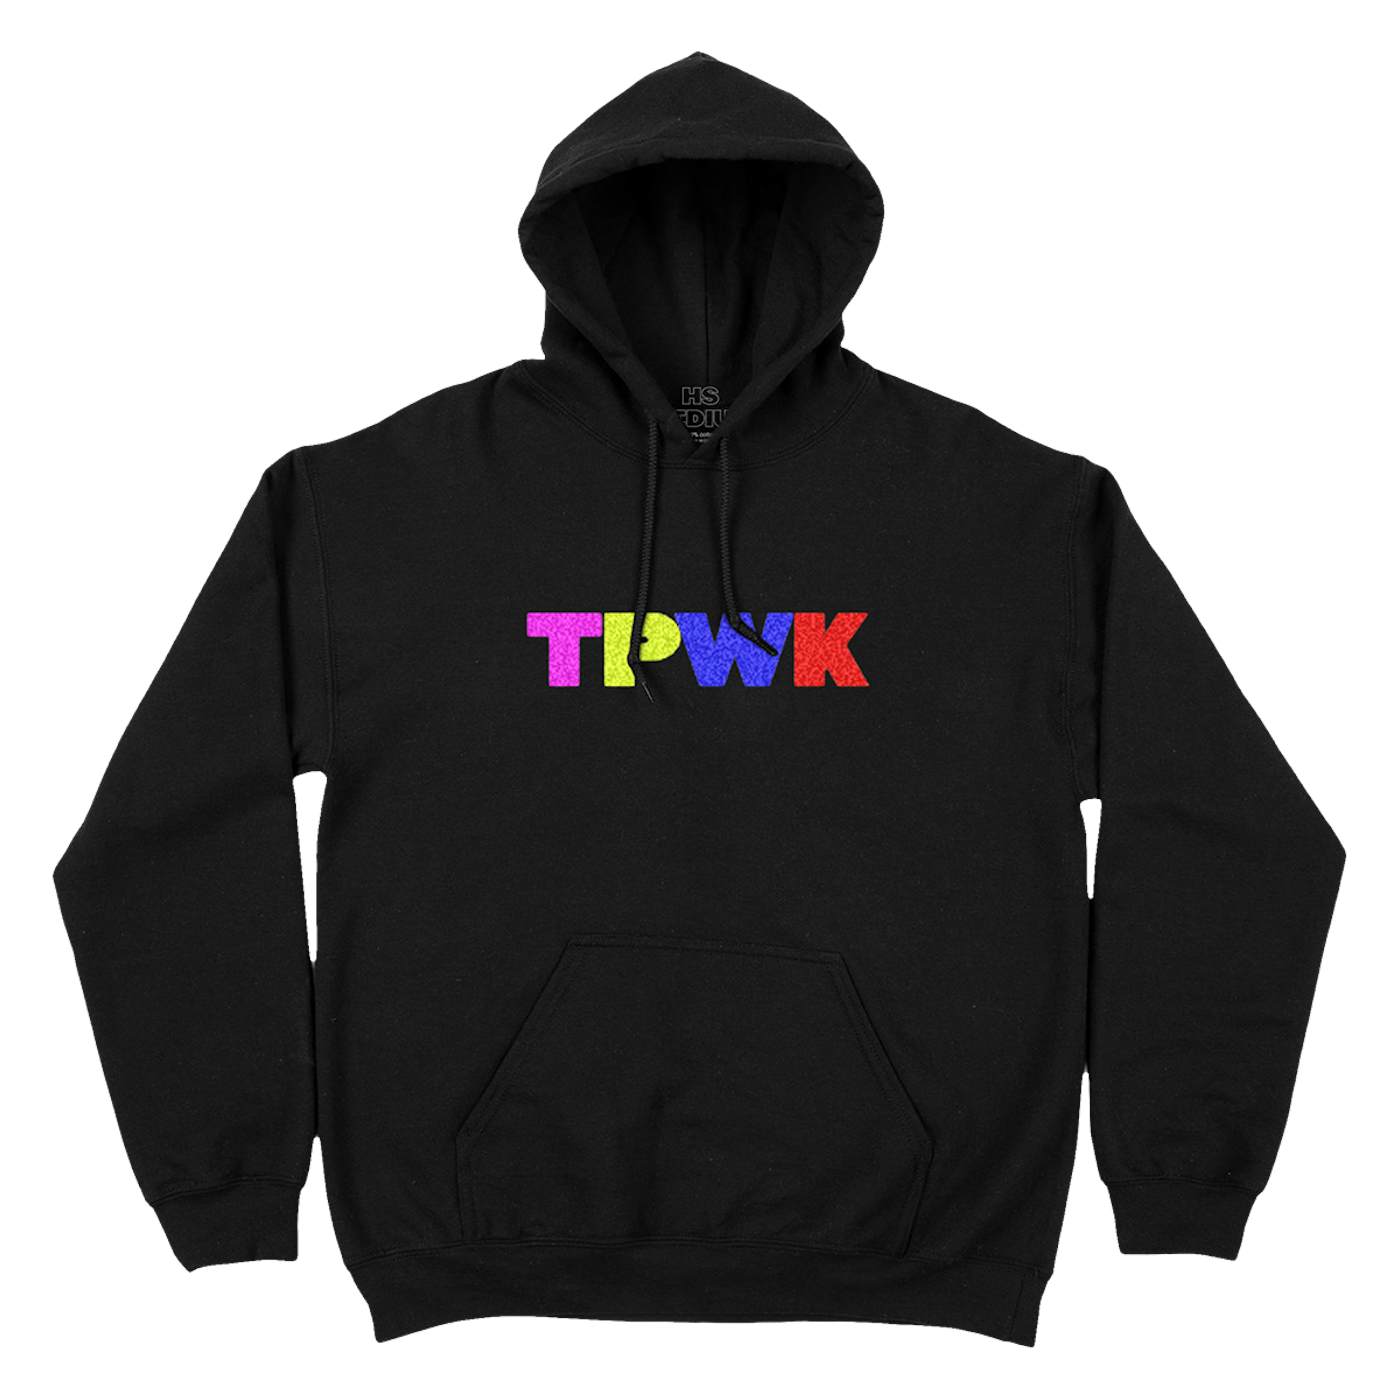 Tpwk Sweatshirts & Hoodies for Sale